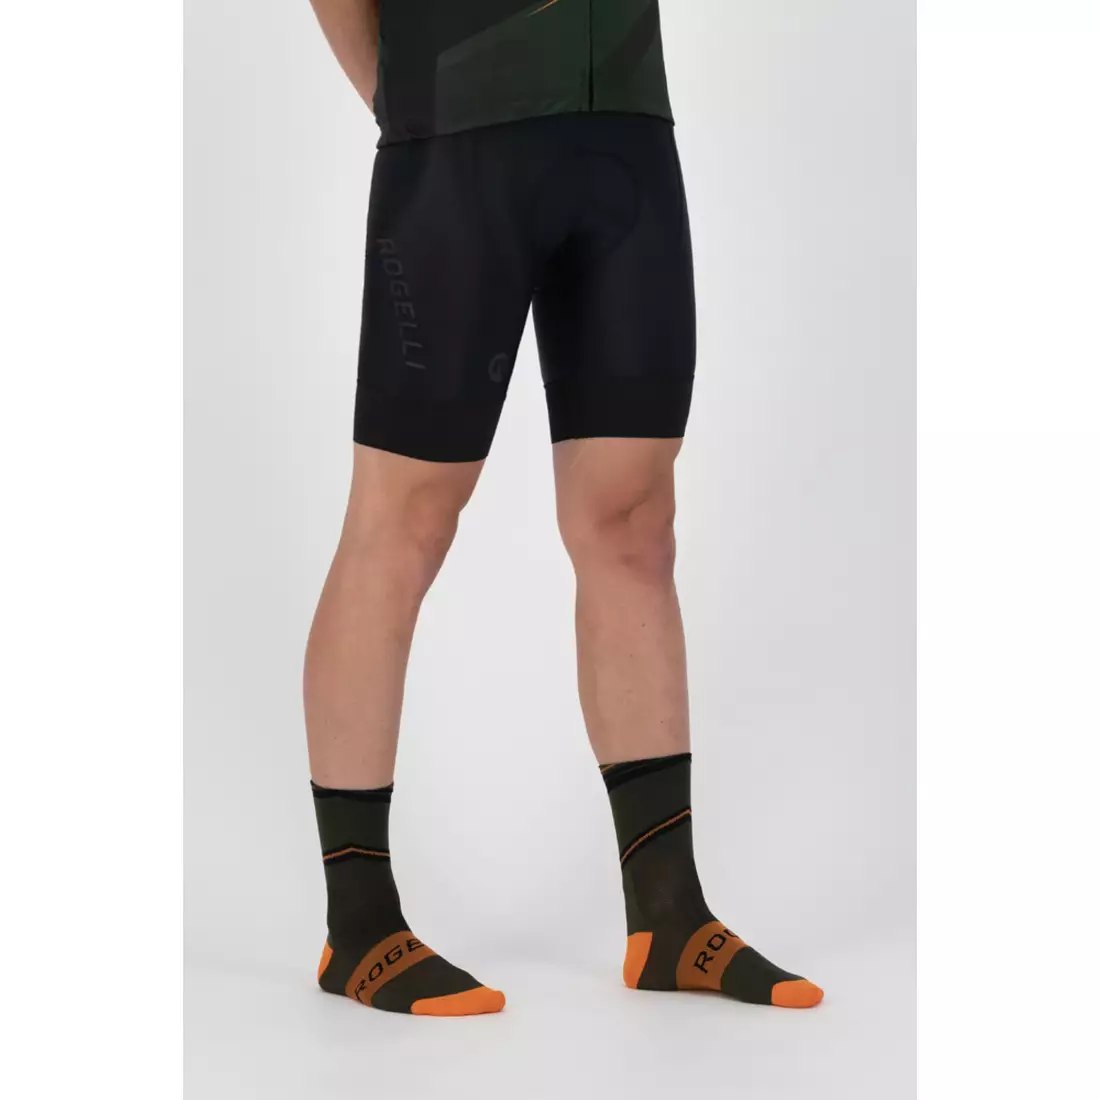 ROGELLI BUZZ Športové ponožky, kaki-oranžové